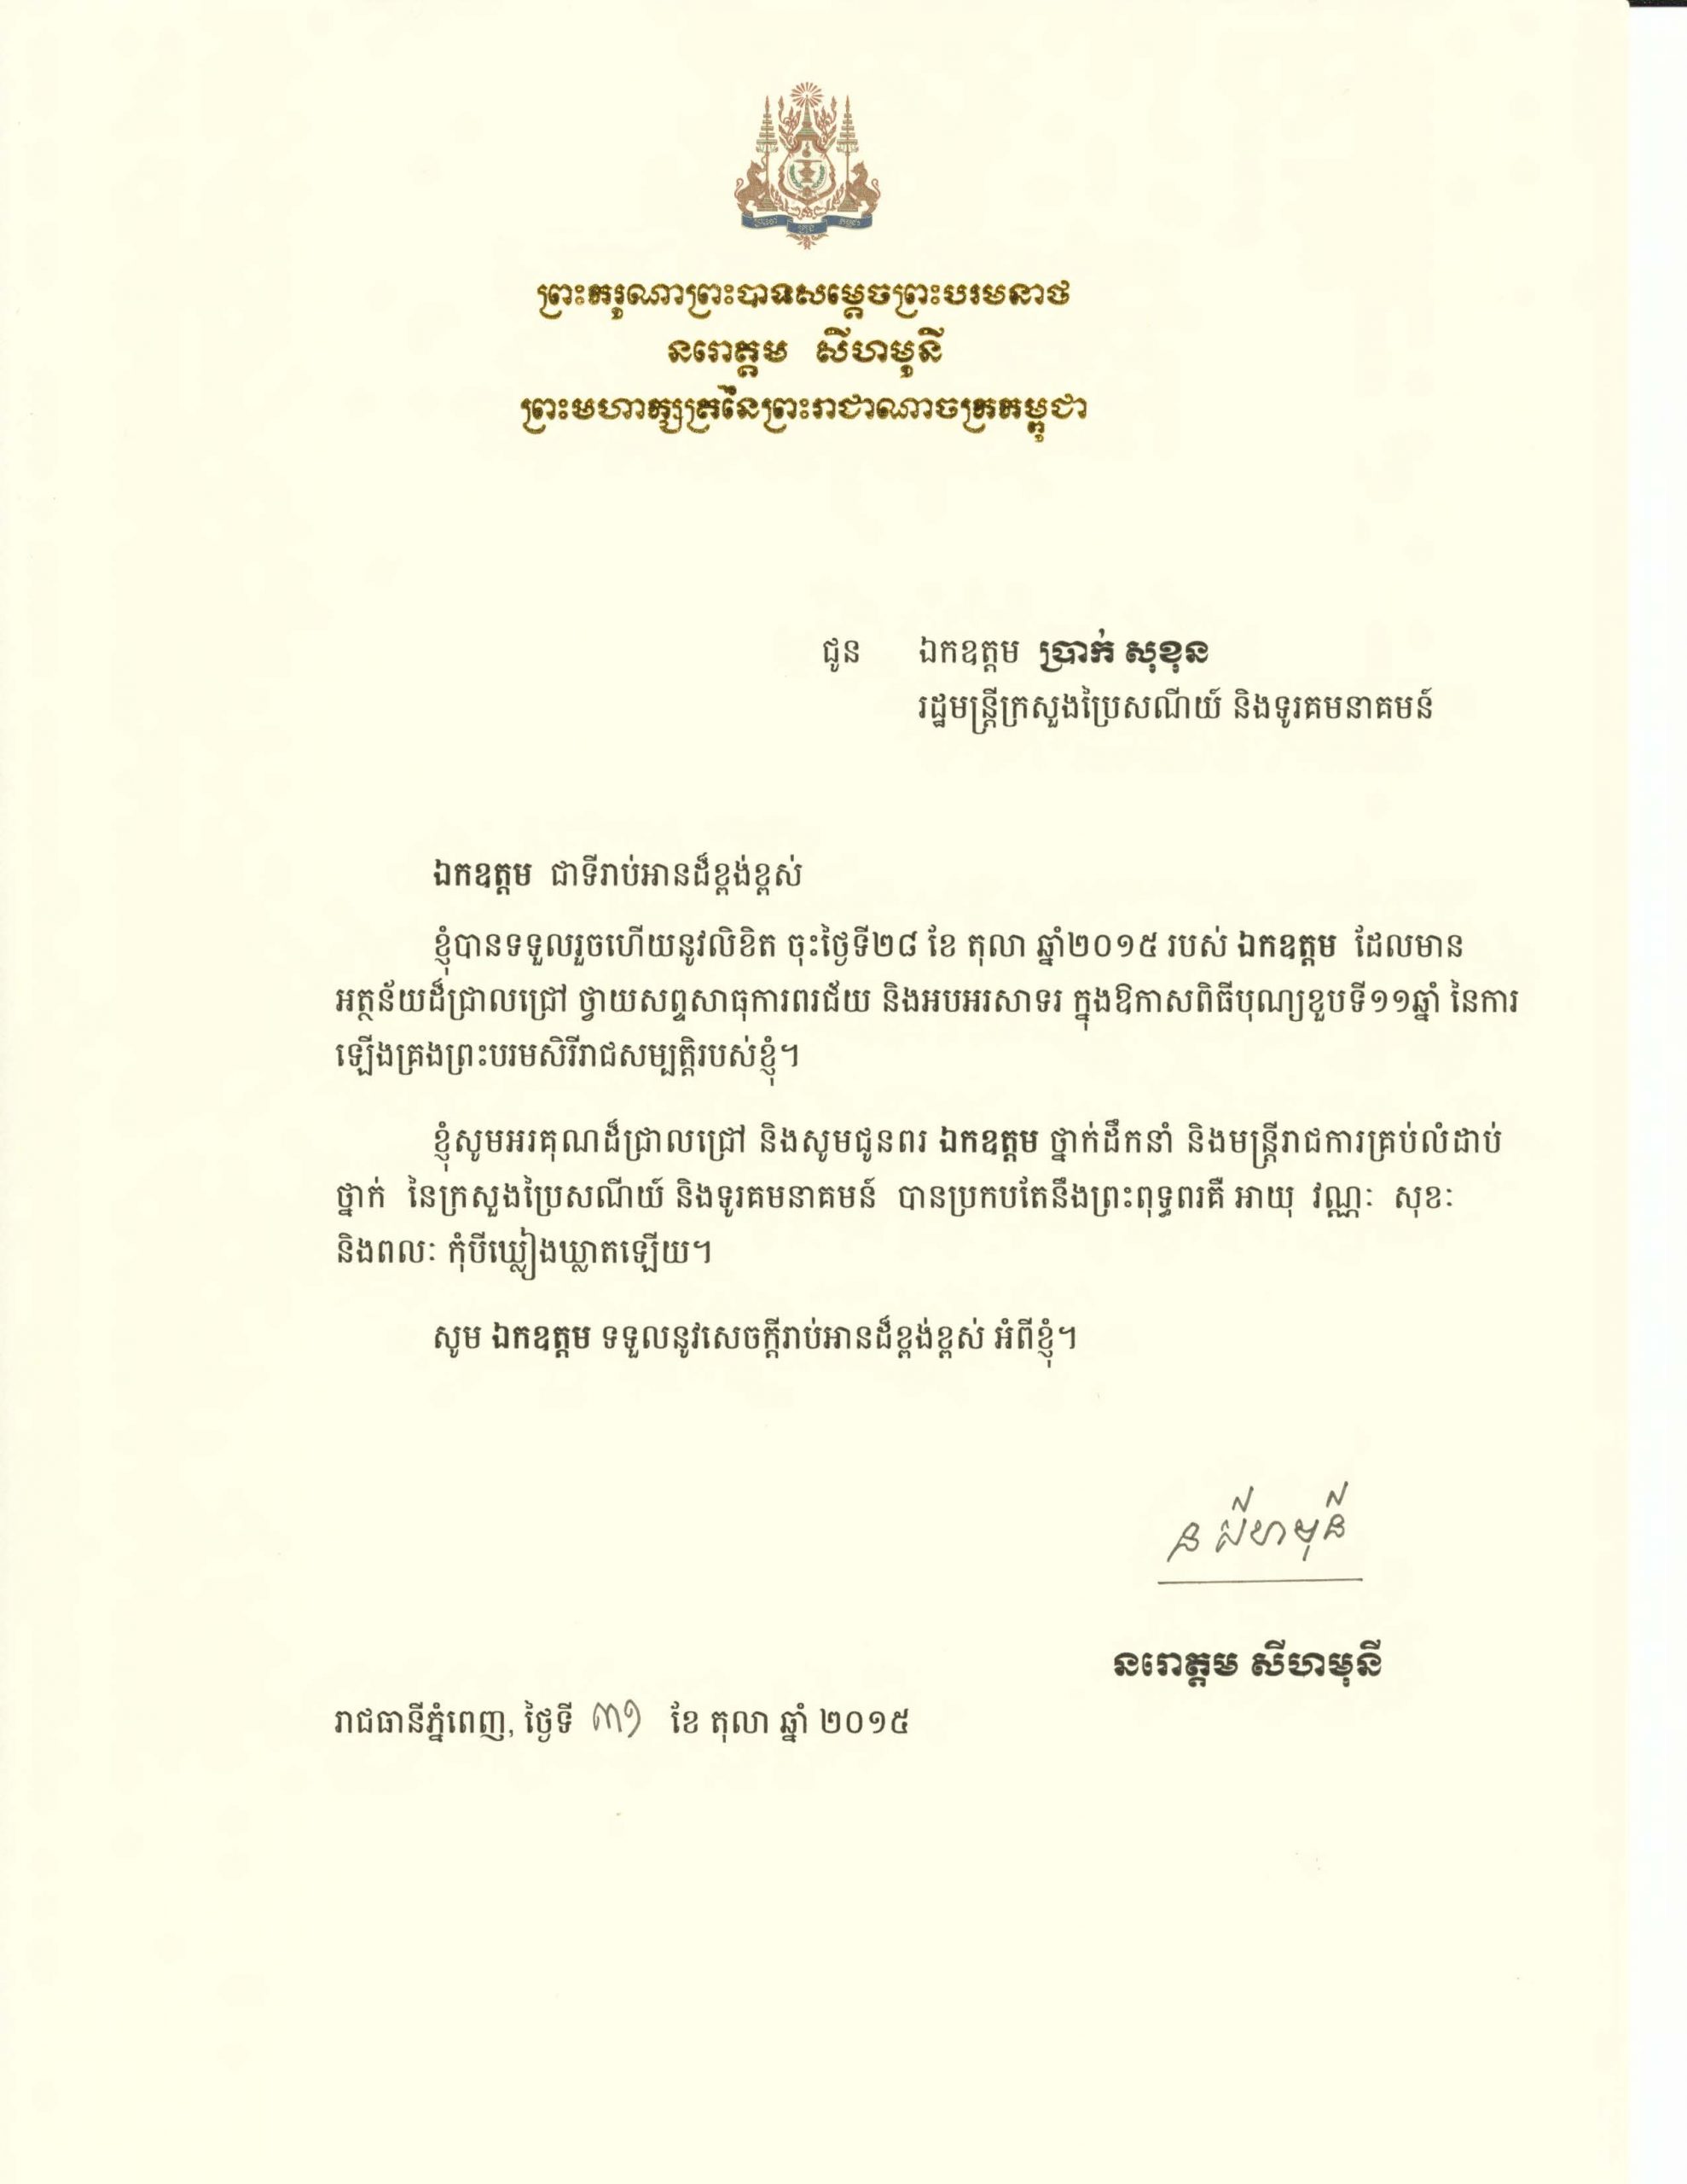 The Royal Letter of His Majesty King Norodom Sihamoni of the Kingdom of Cambodia to H.E. Minister Prak Sokhonn